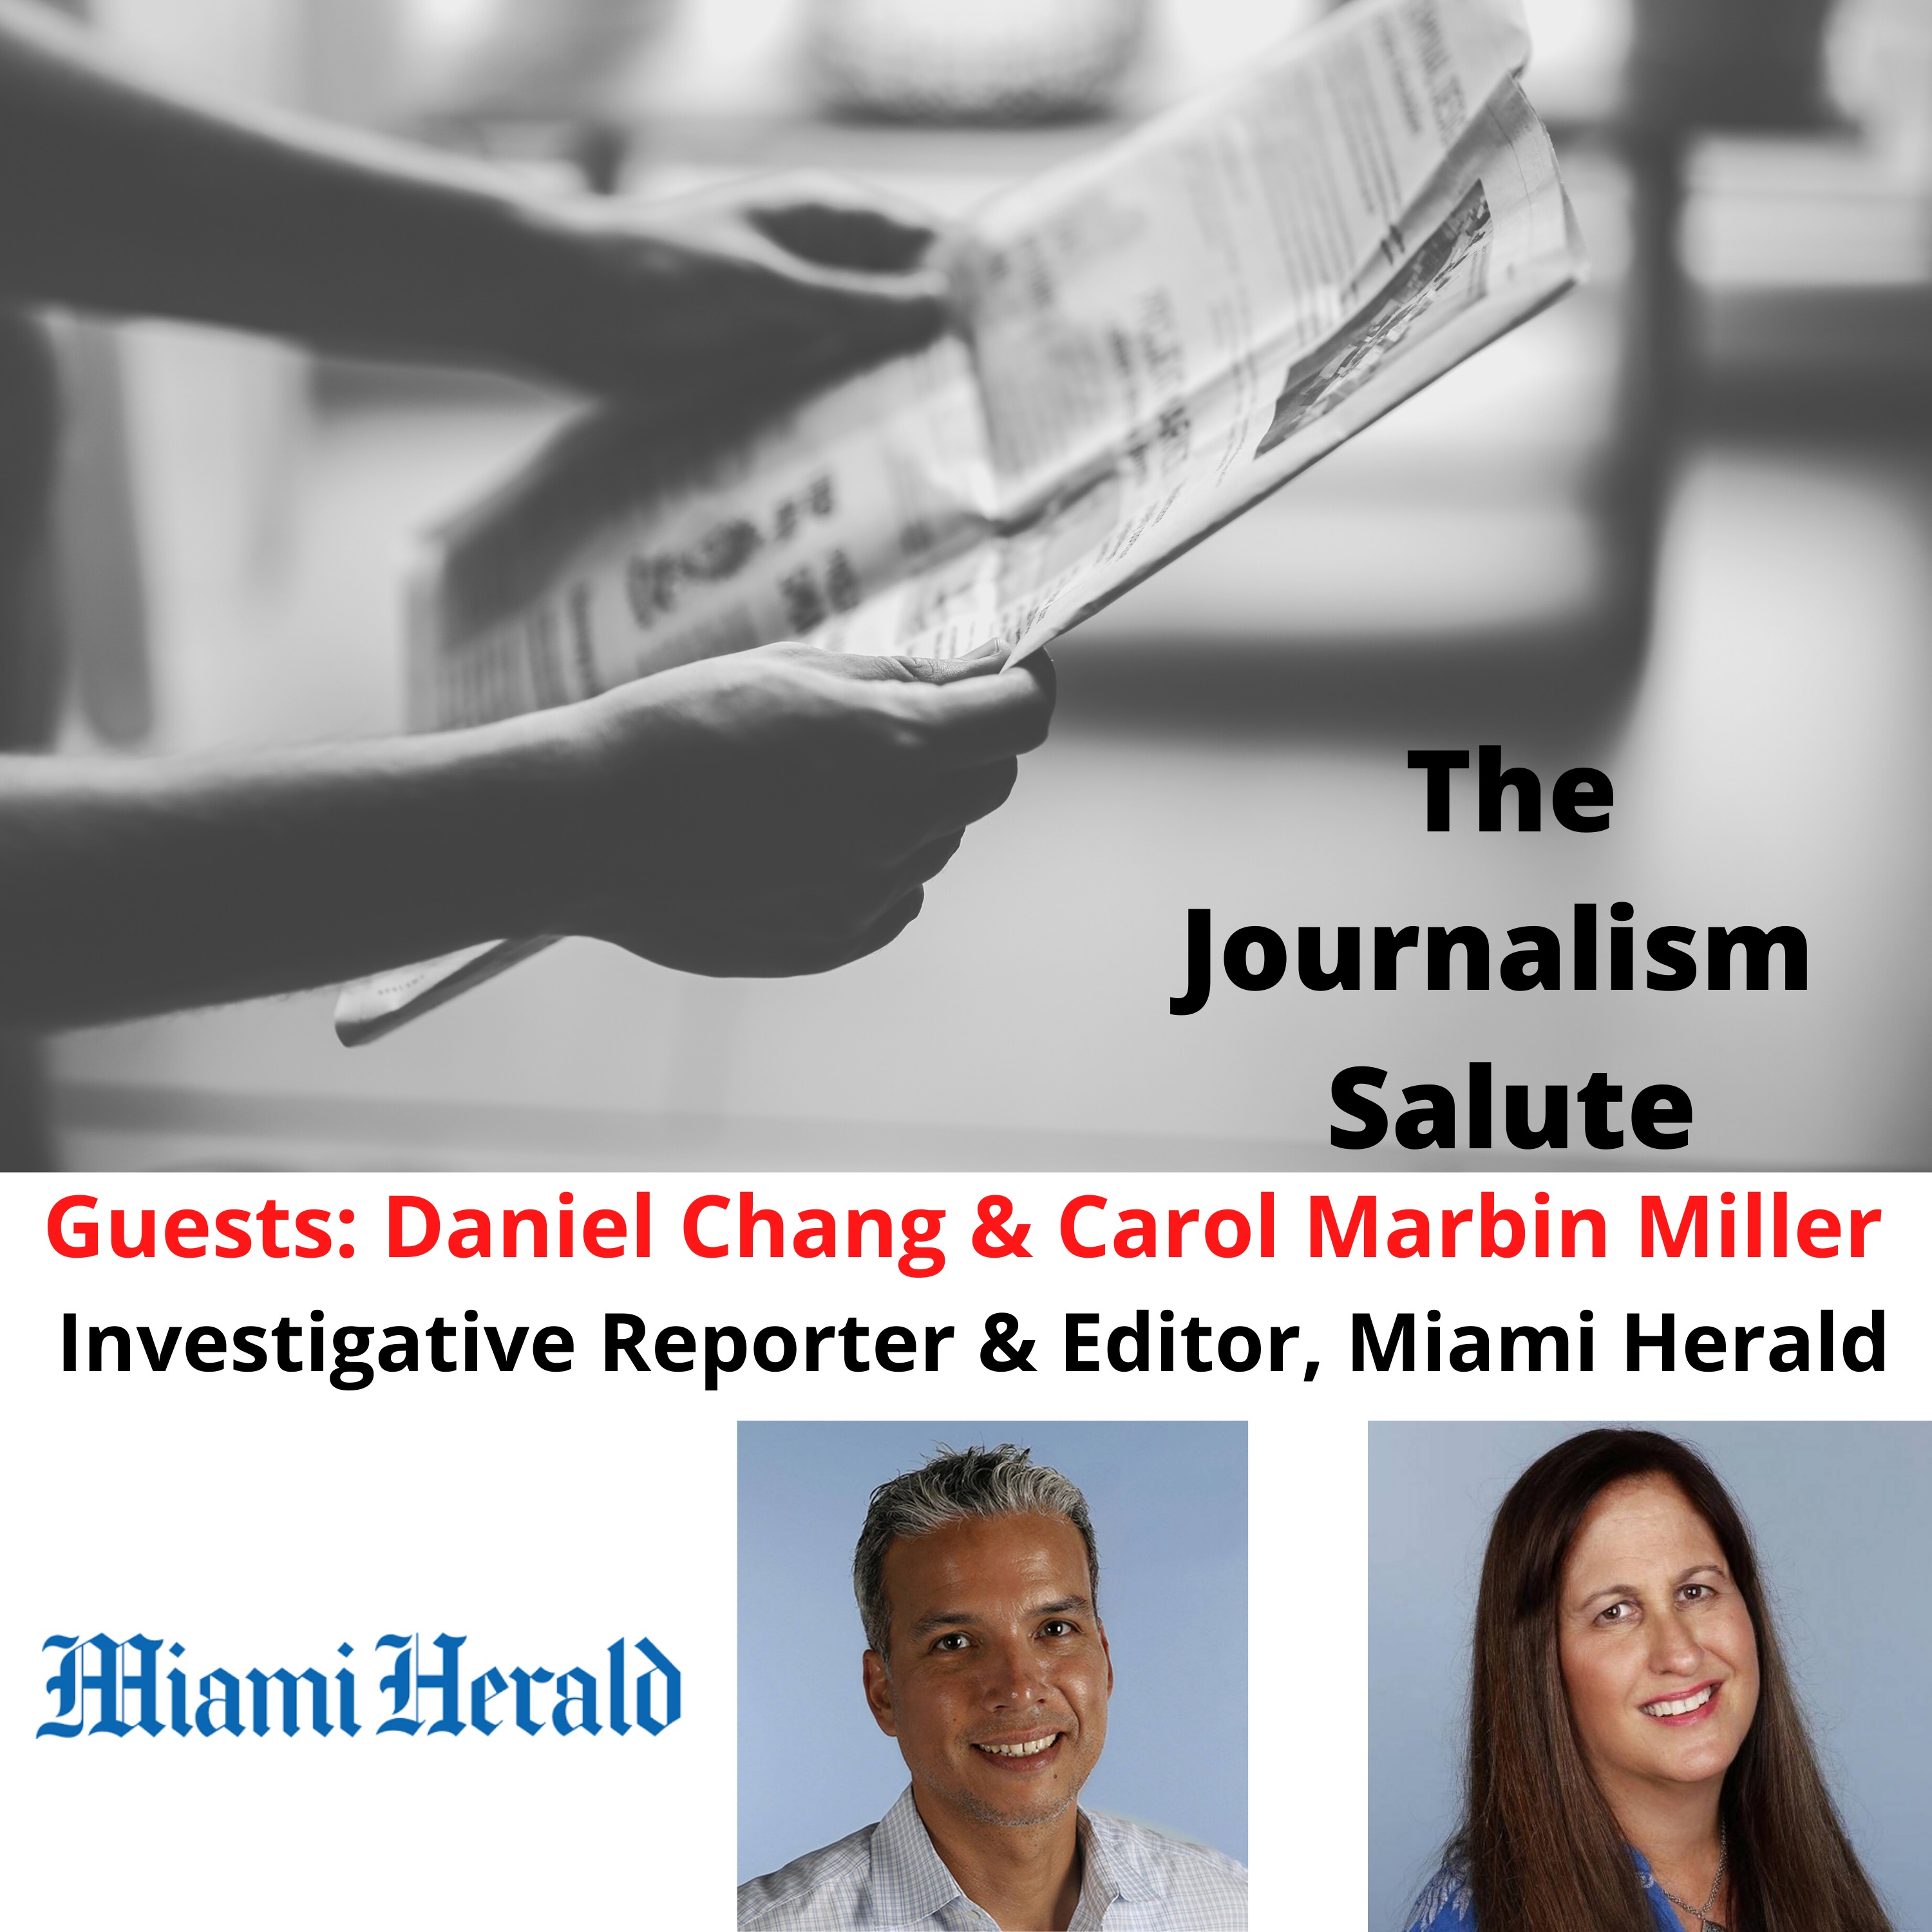 Daniel Chang and Carol Marbin Miller, Investigative Reporter and Editor at The Miami Herald